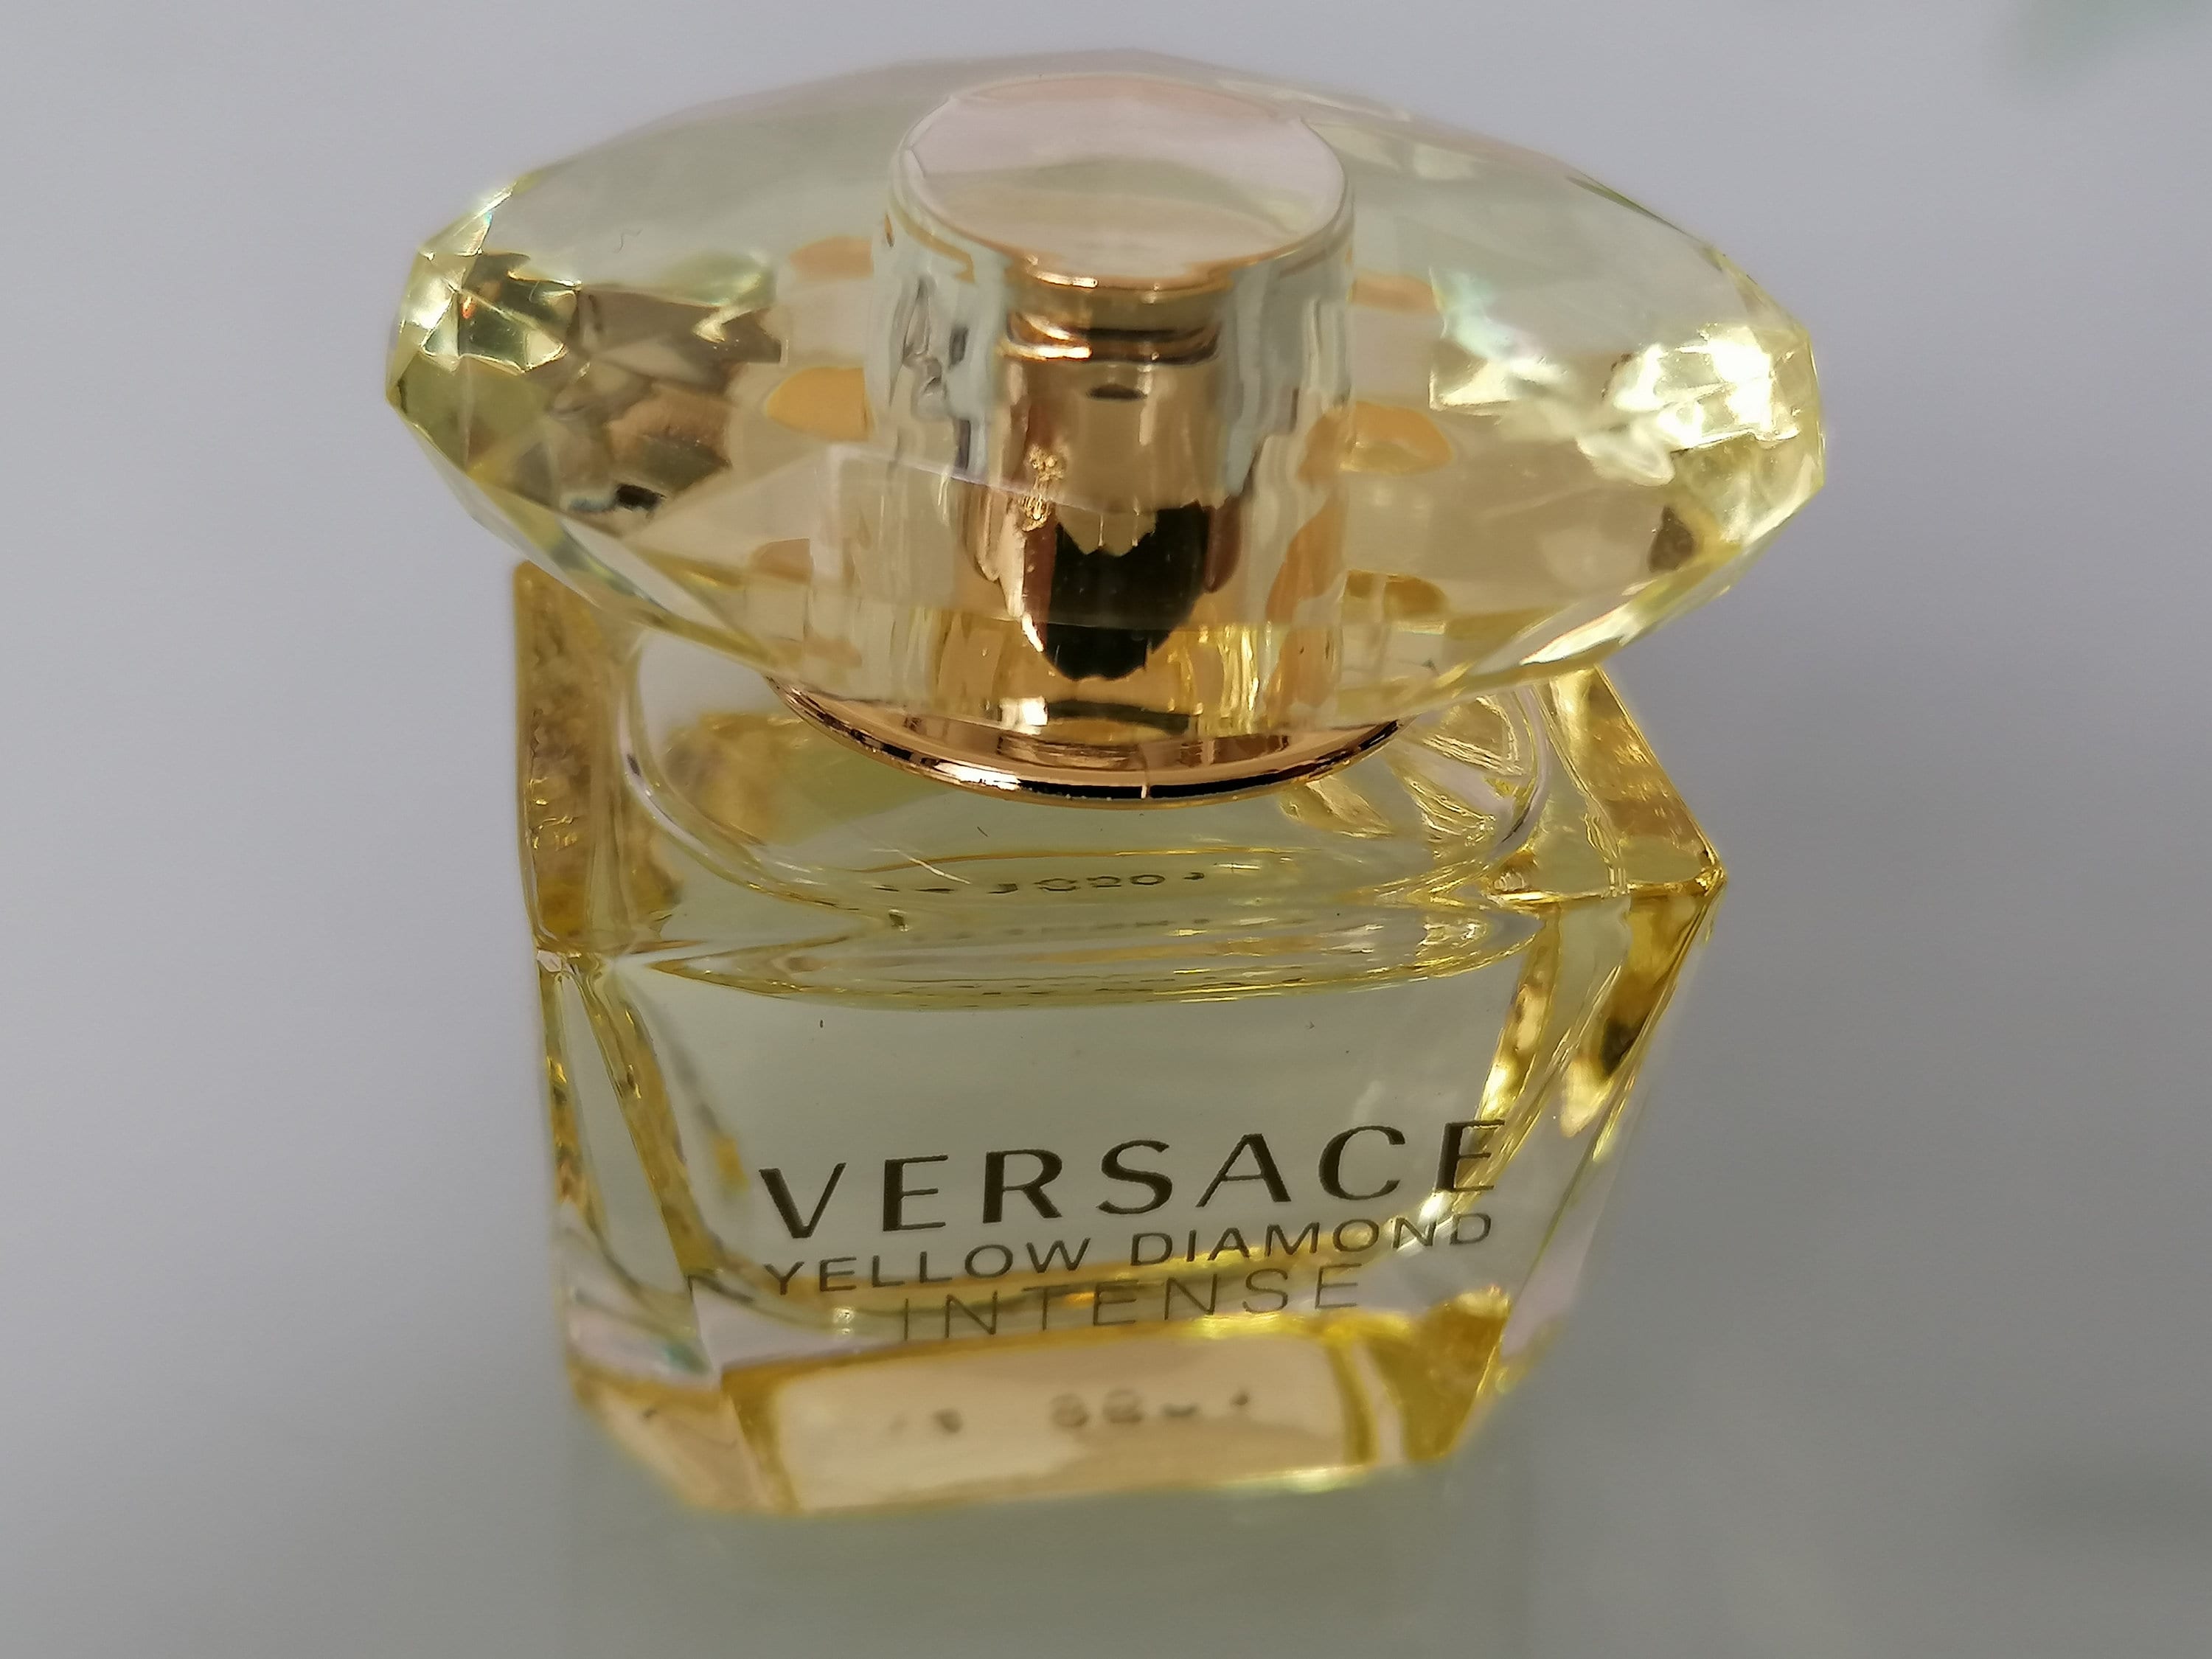 Versace Yellow Diamond Intense Eau de Parfum 5 ml Miniature | Etsy